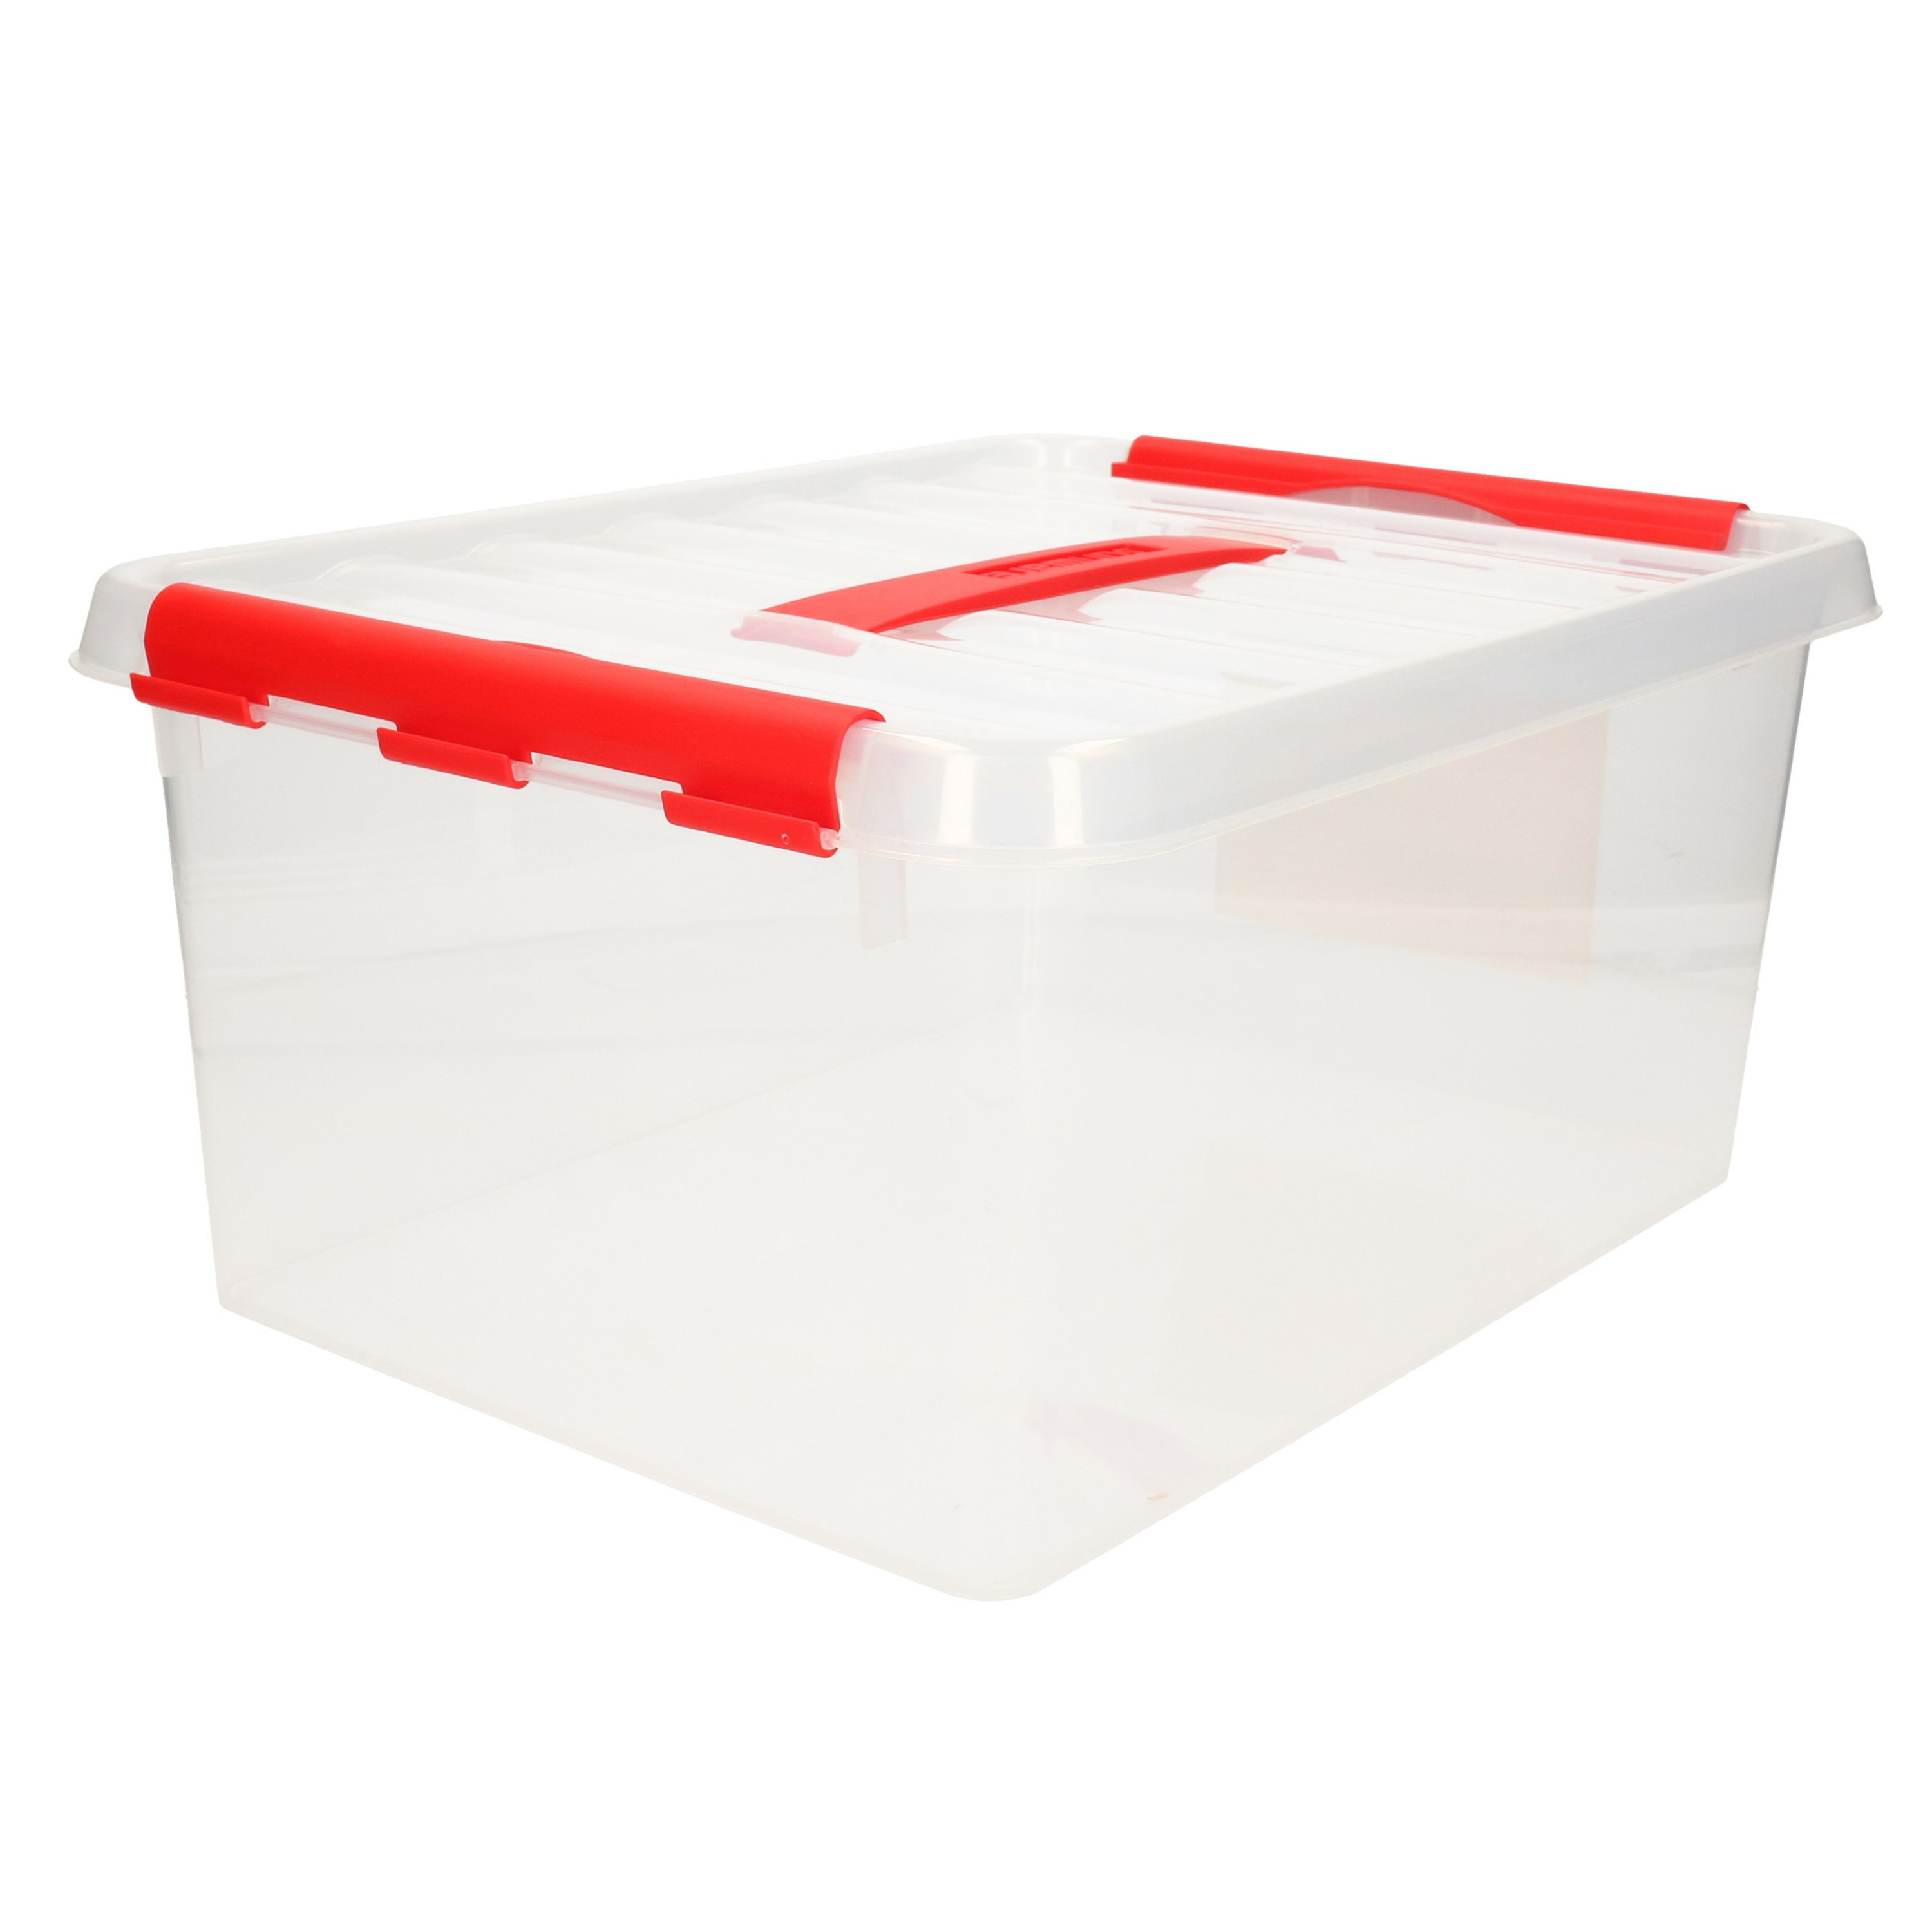 Sunware opbergbox-opbergdoos transparant-rood 15 liter 40 x 30 x 18 cm